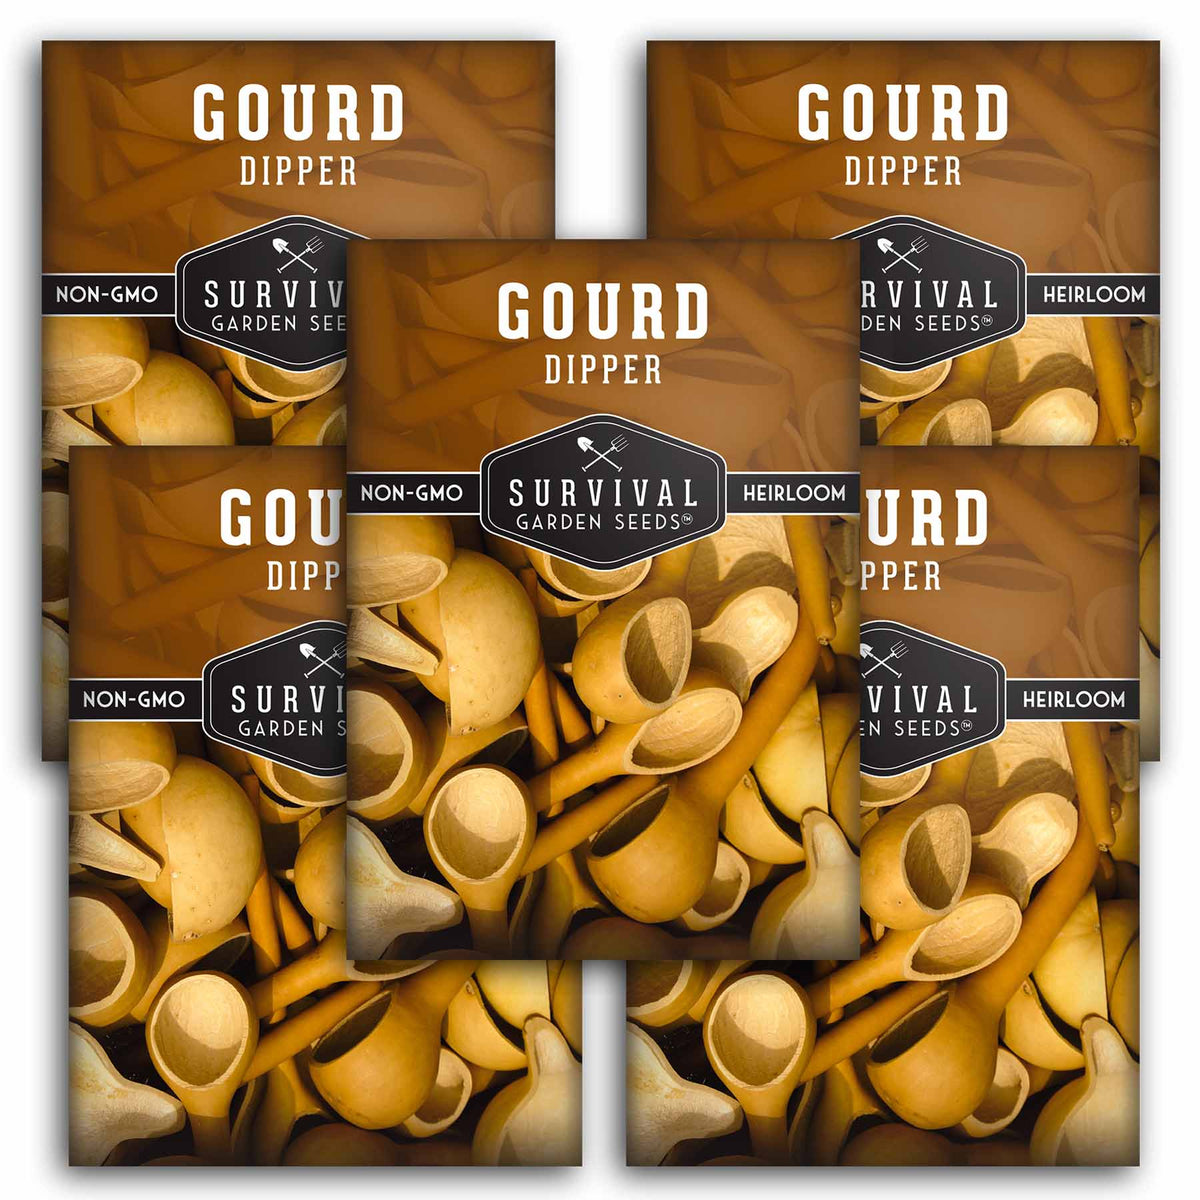 5 packets of Dipper Gourd seeds